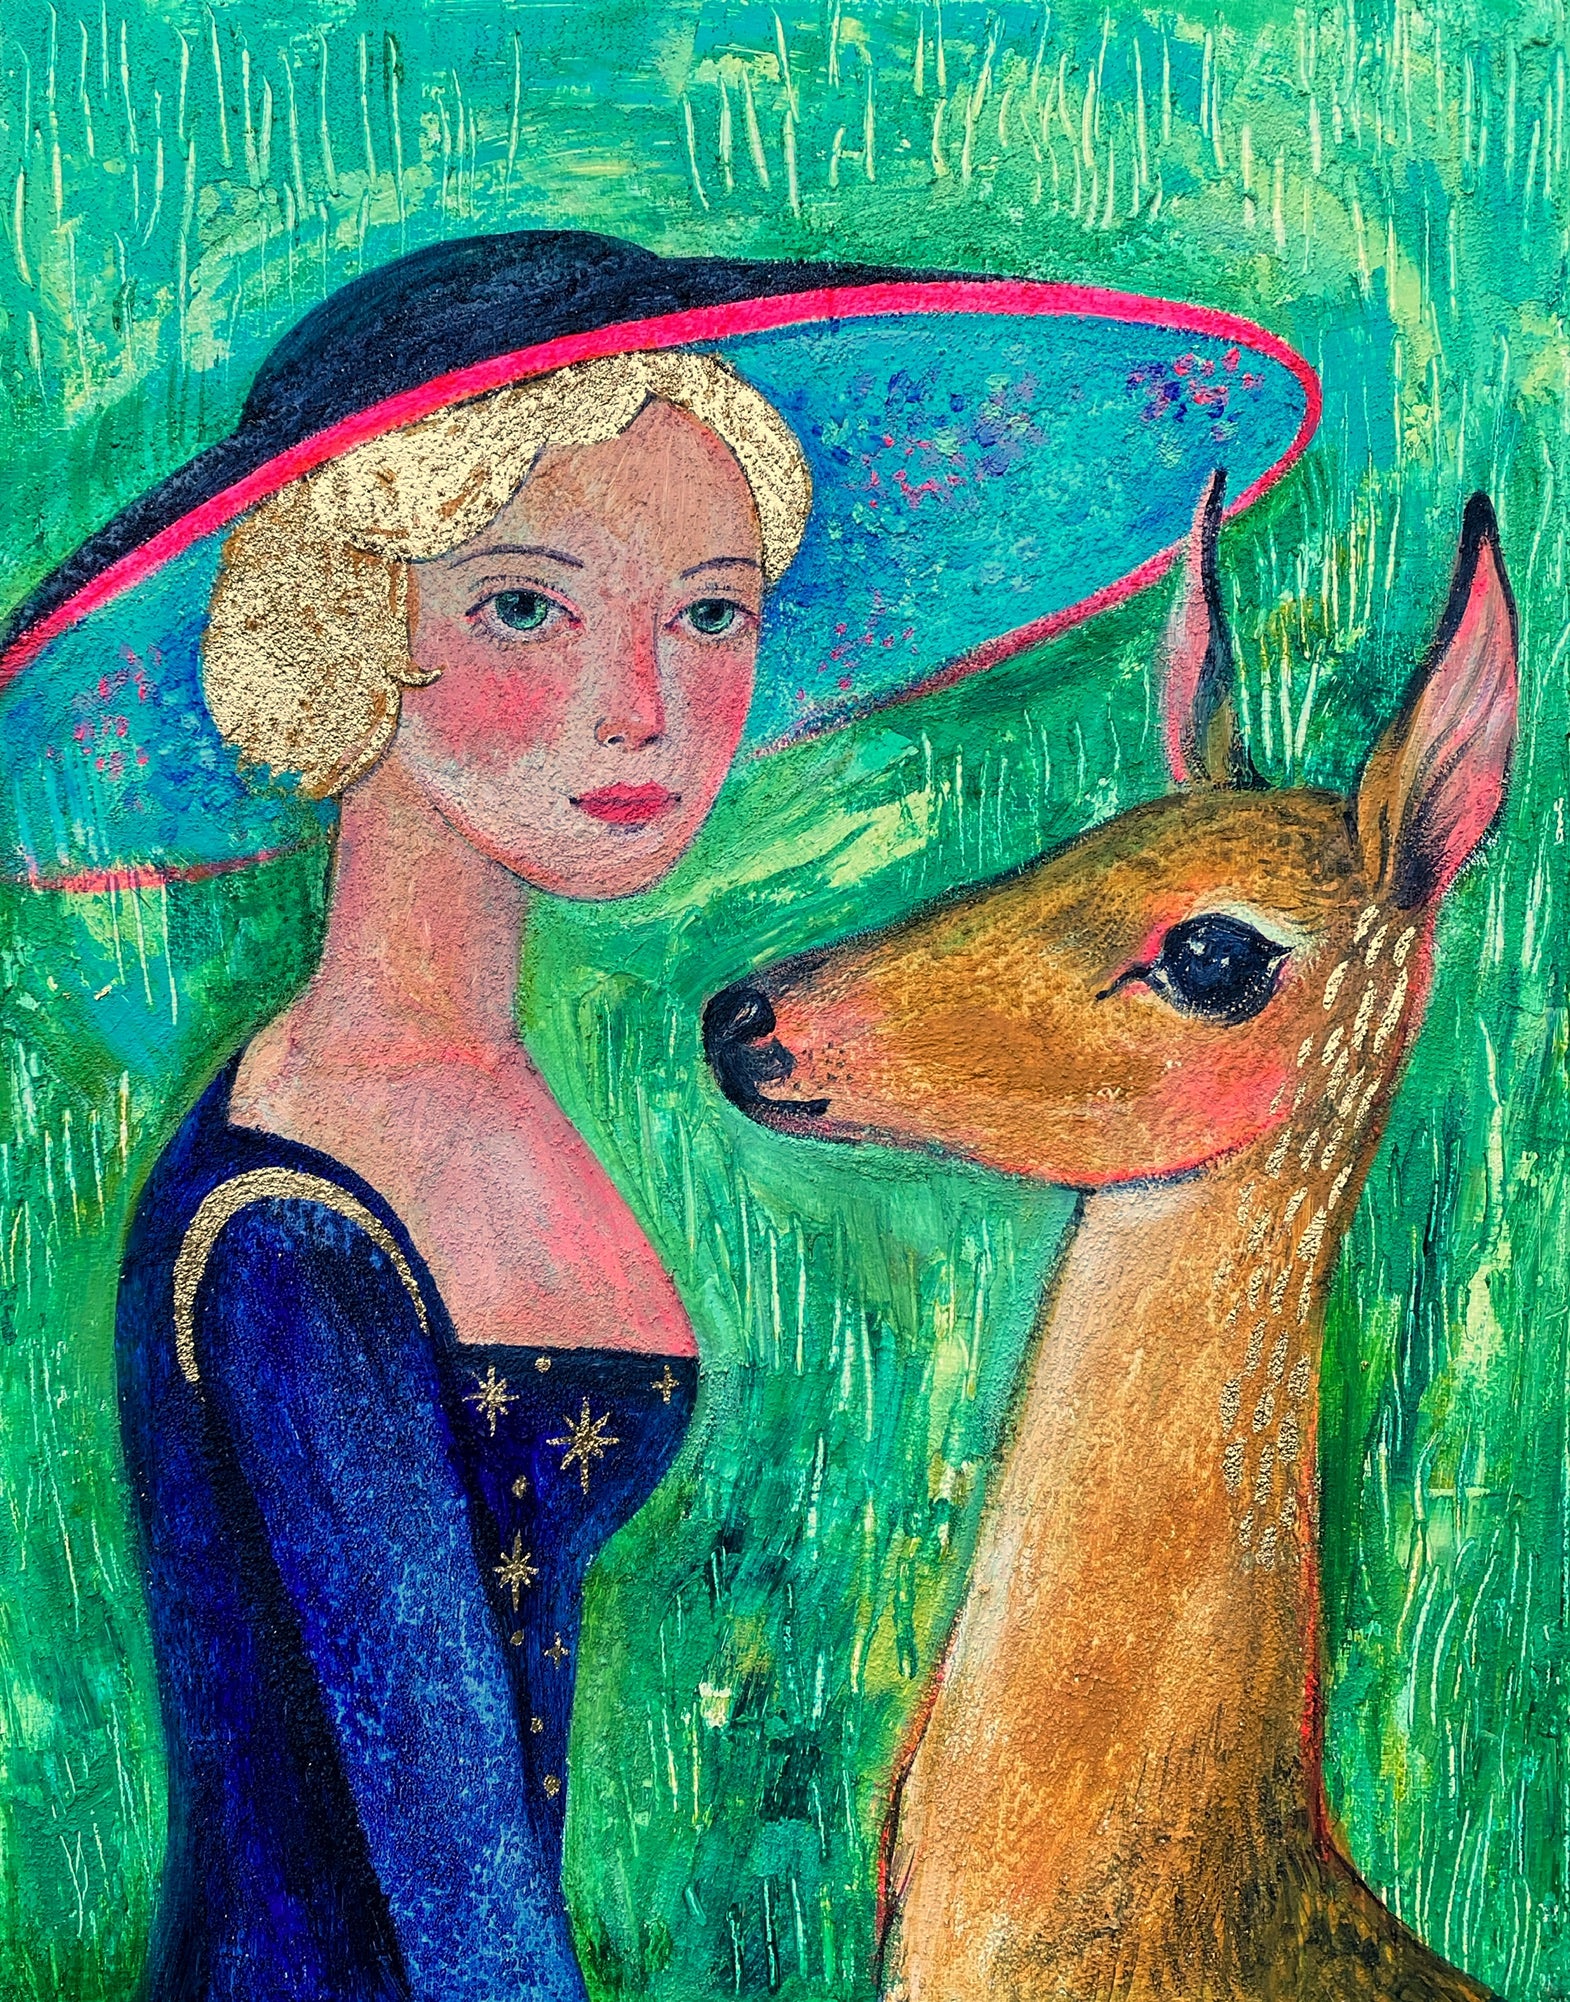 Lady with the deer (2021) by Sofiia Bortnikova